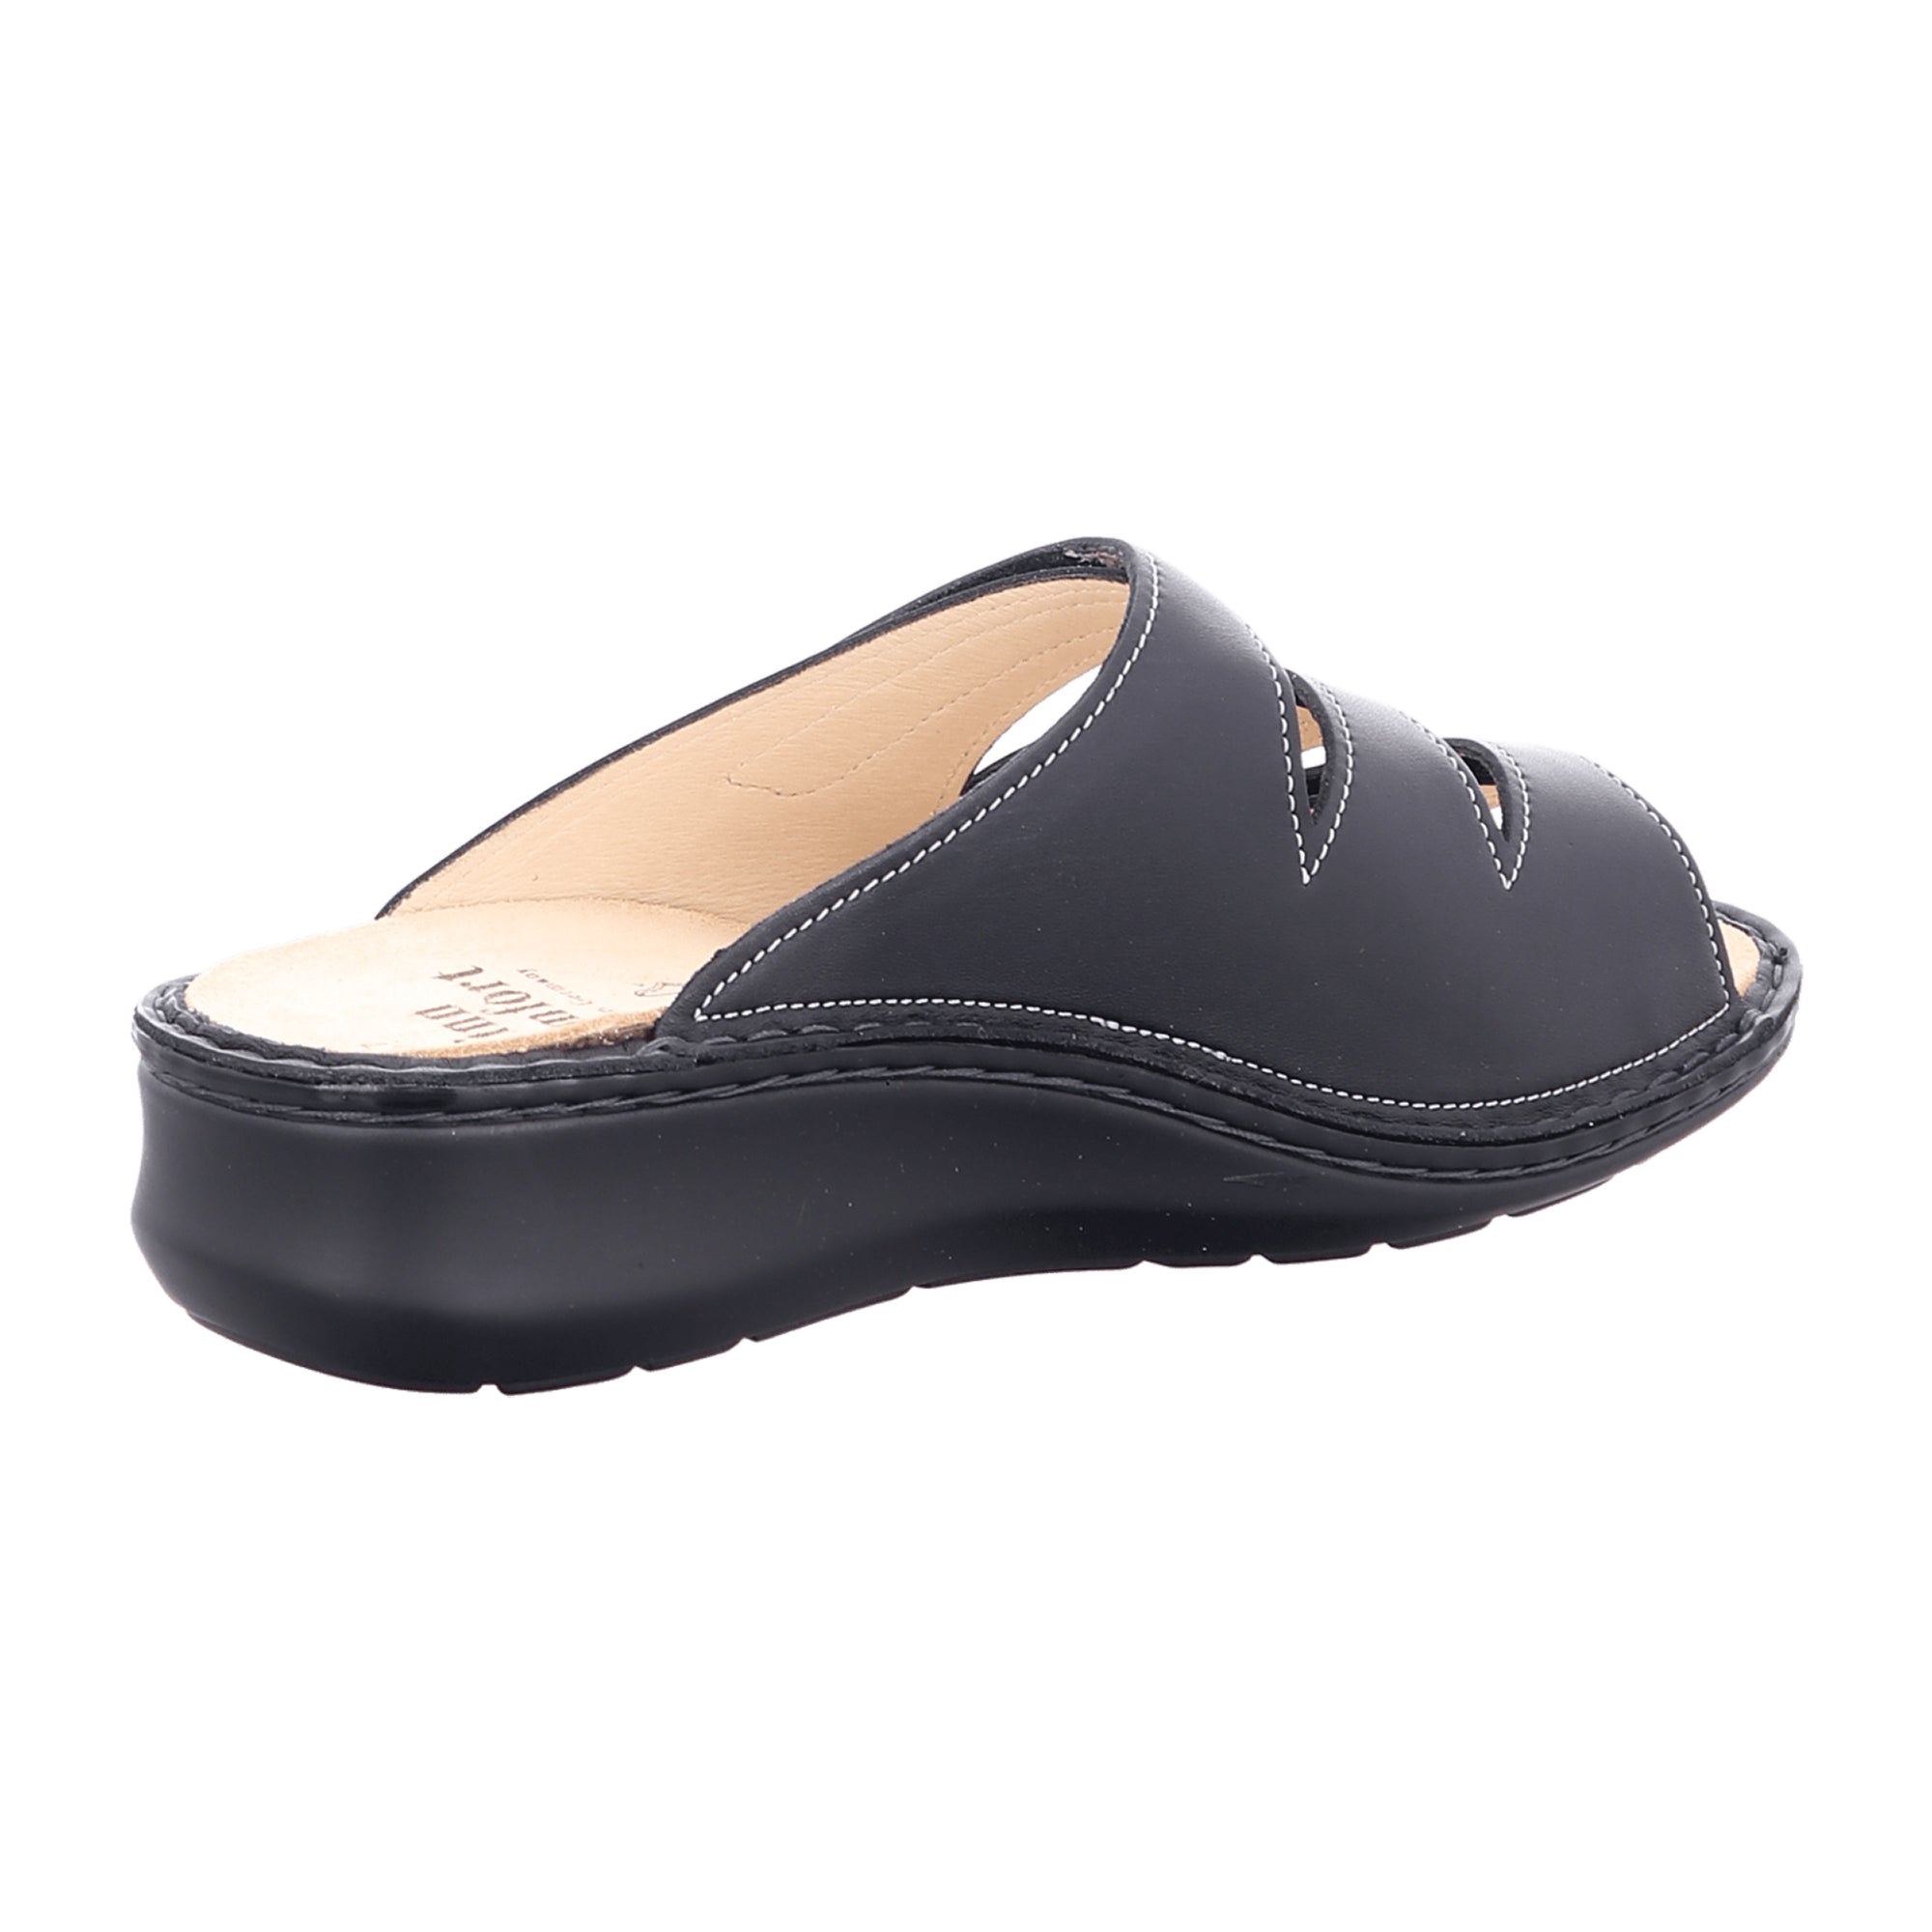 Finn Comfort Carcina Women's Orthopedic Black Shoes - Stylish & Comfortable